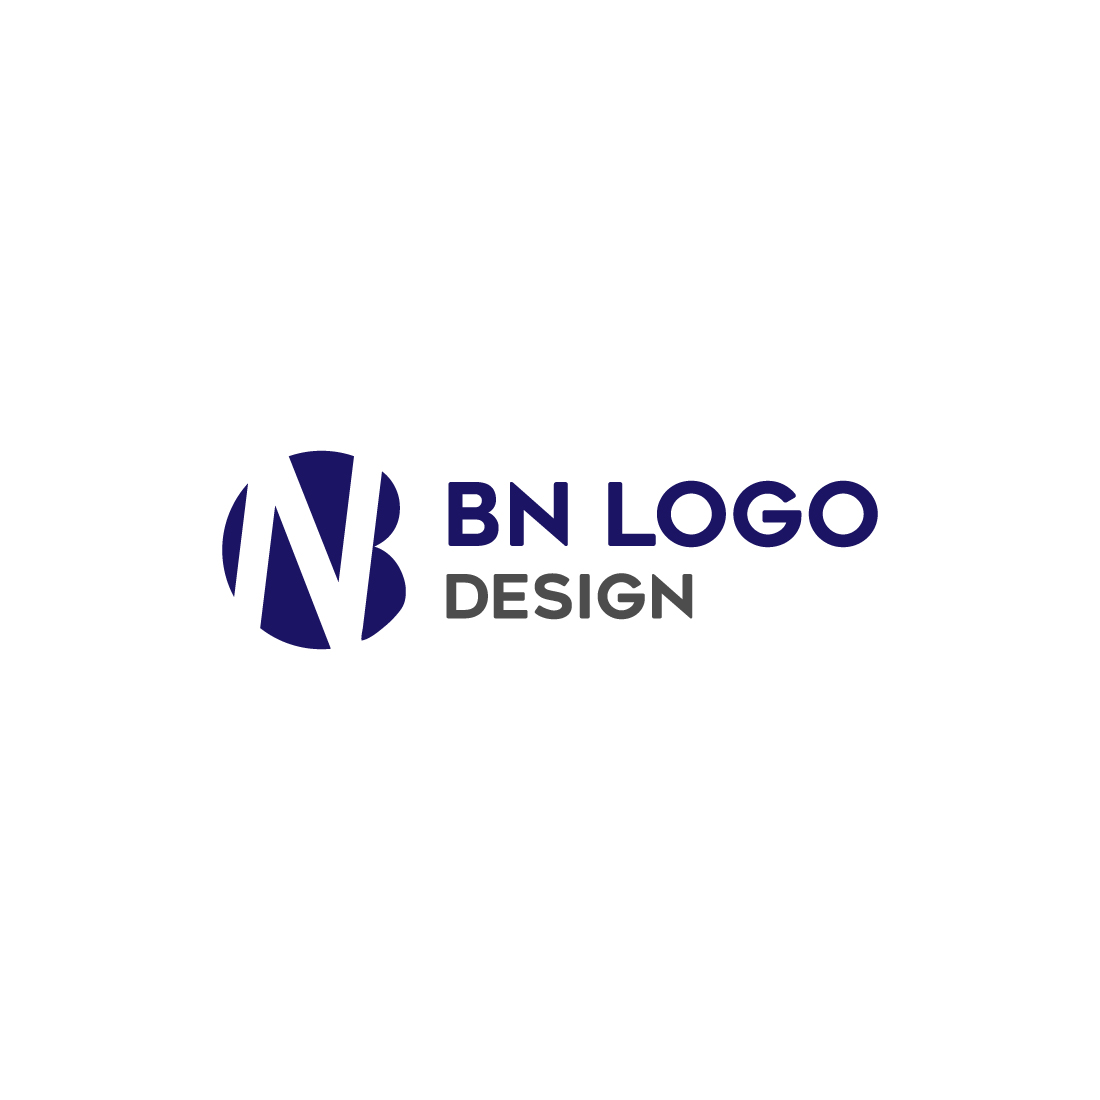 BN logo preview image.